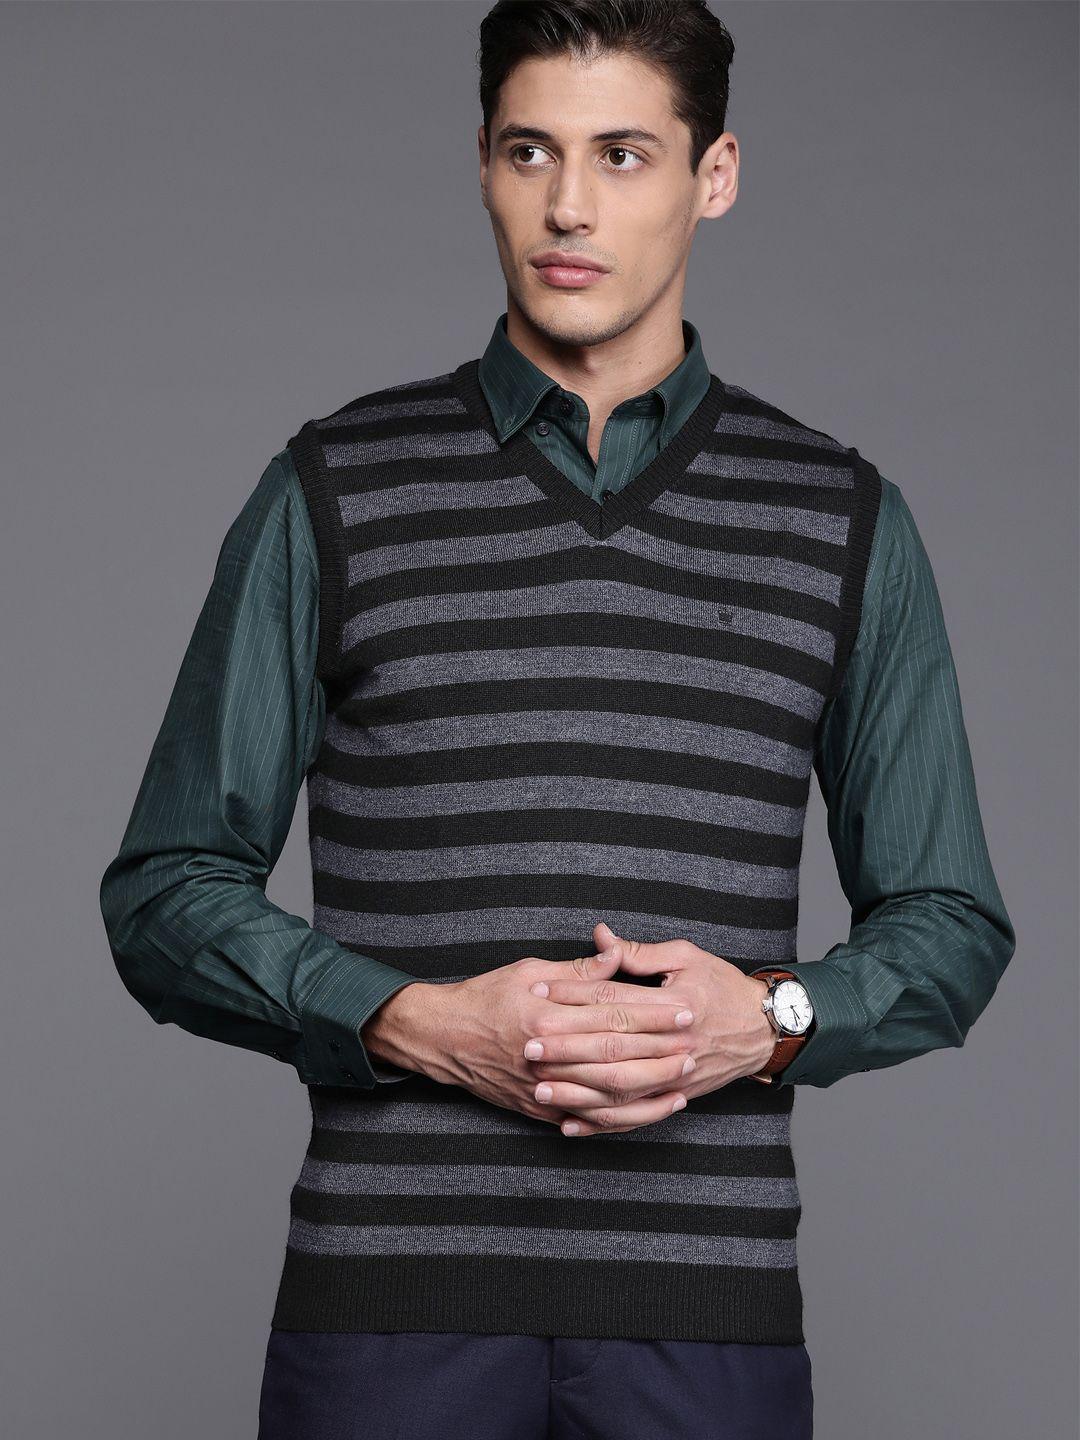 louis philippe men black & charcoal grey striped sweater vest